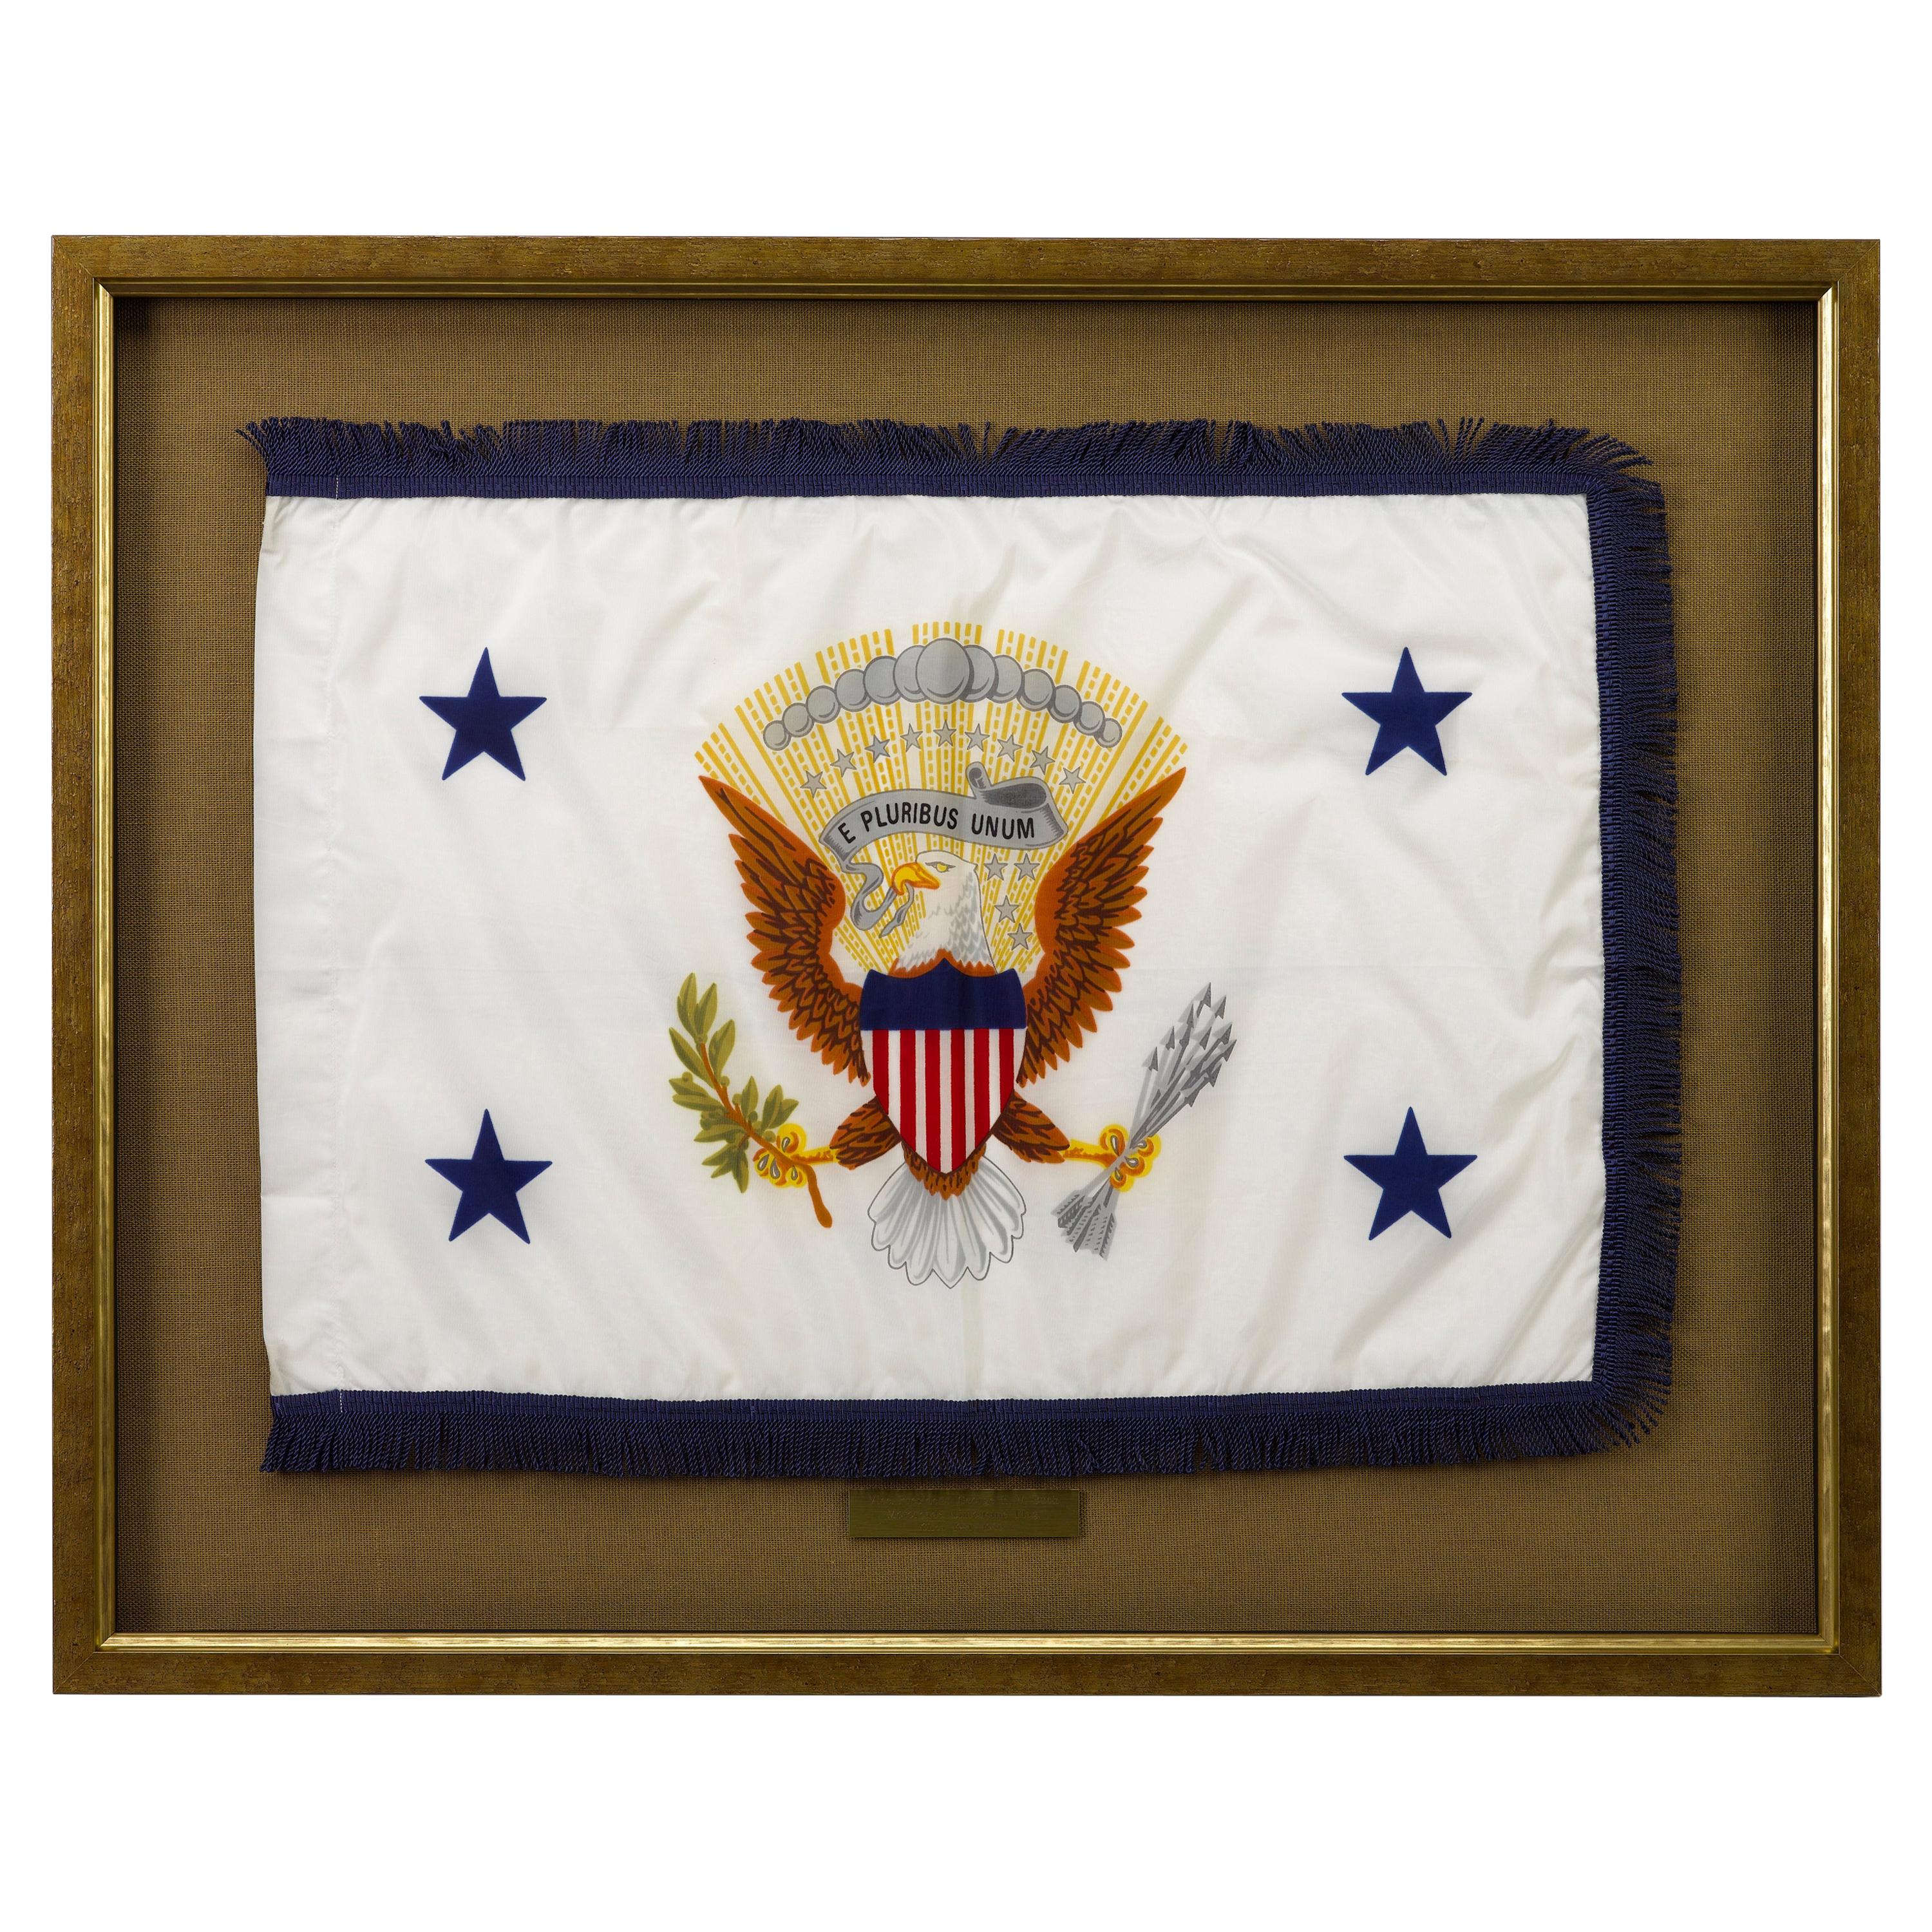 George H W Bush Vice-Presidential Limousine Flag, circa 1981-1989